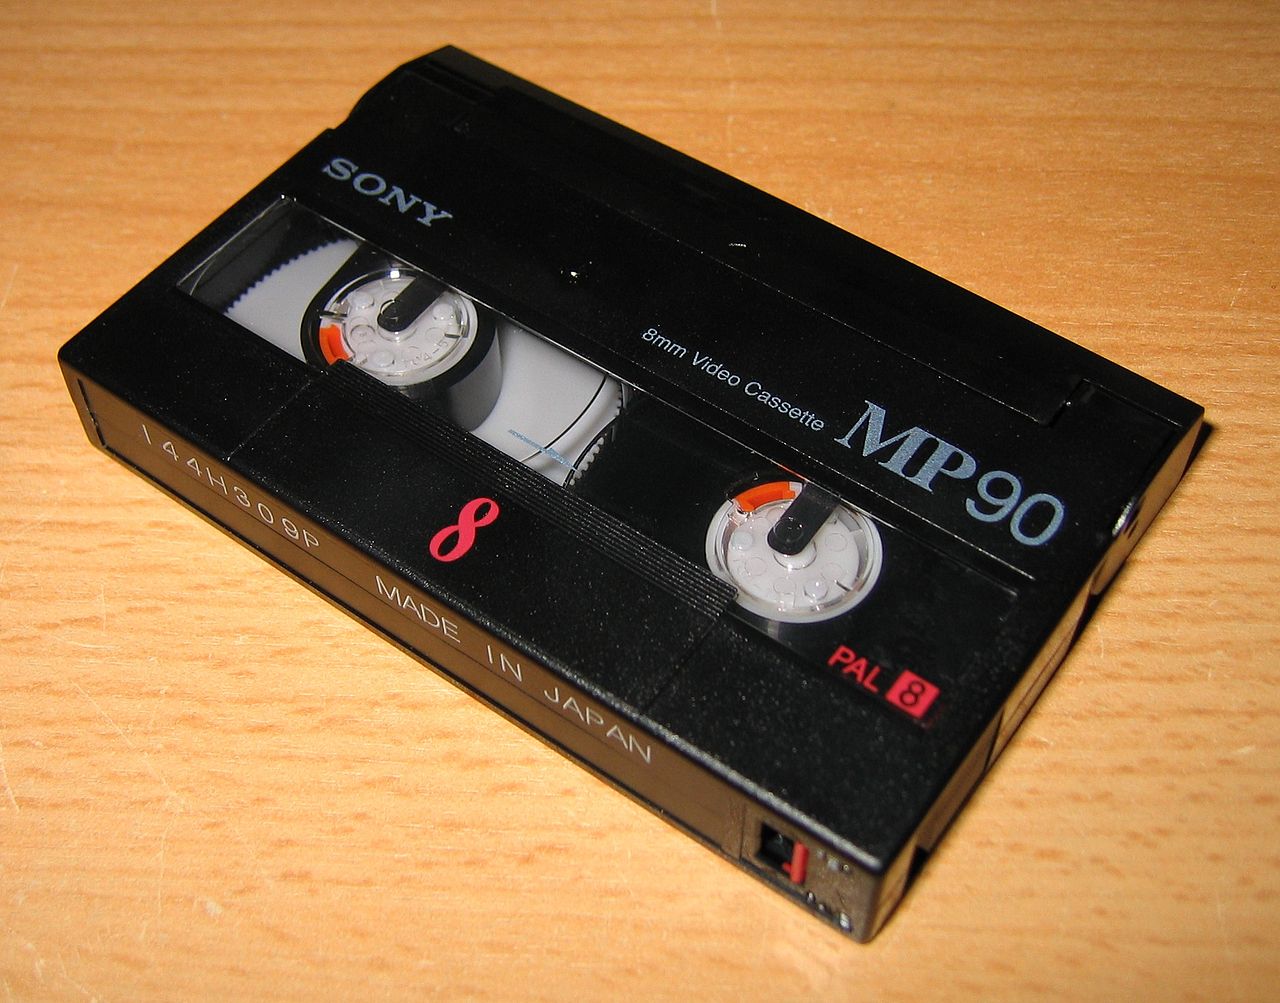 Contour Vestiging Kinematica File:Video 8 cassette.jpg - Wikimedia Commons